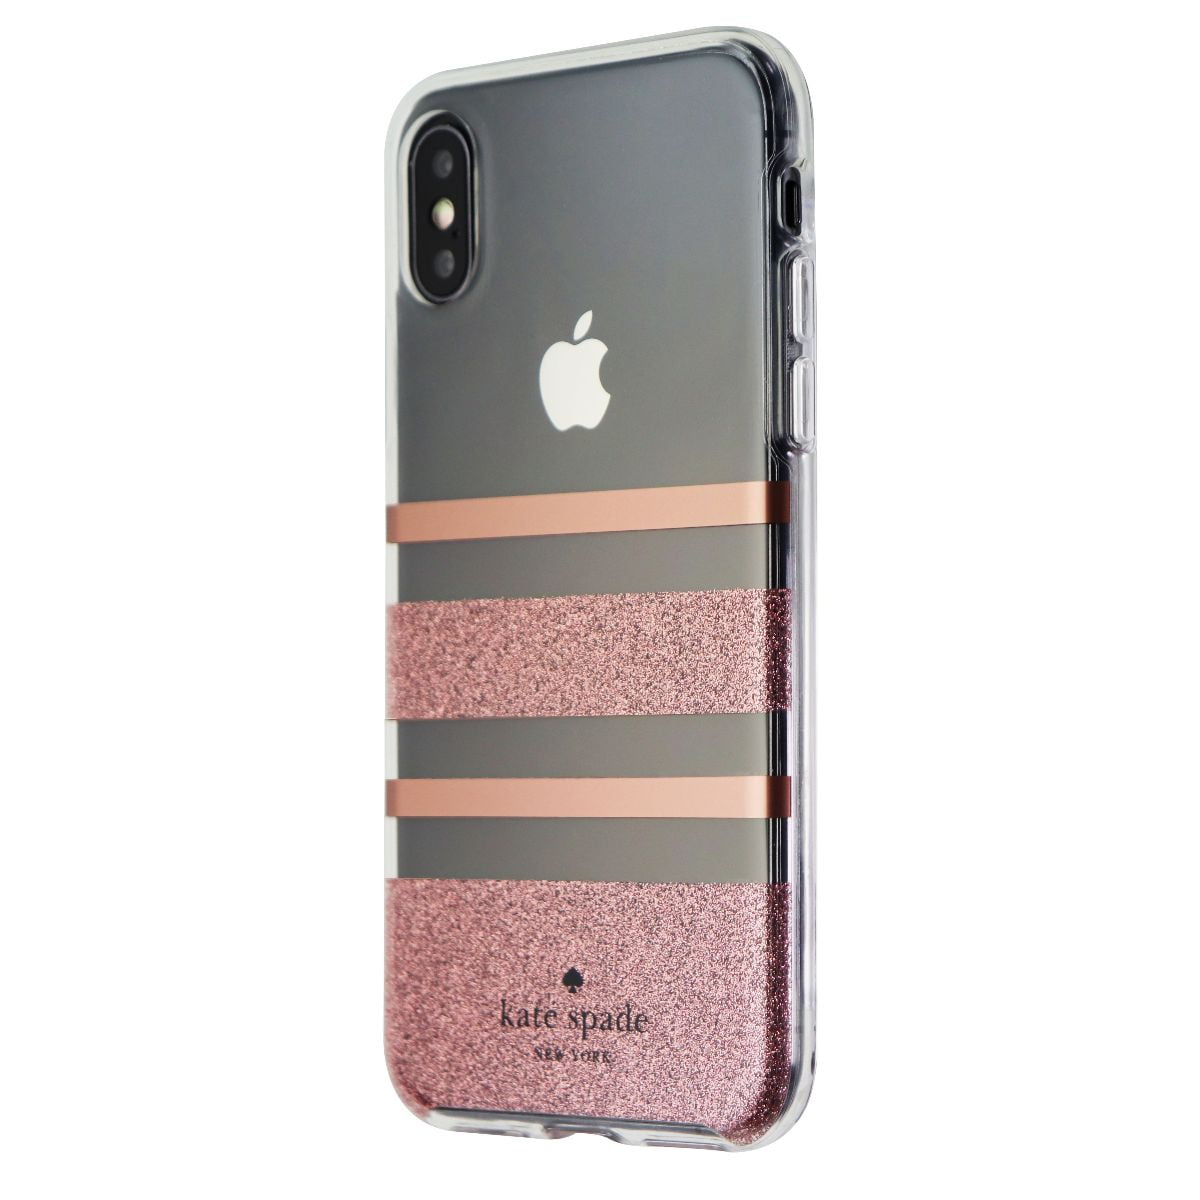 Kate Spade Flexible Hard Case for iPhone X 10 - Clear/Rose Gold/Glitter  Stripe 